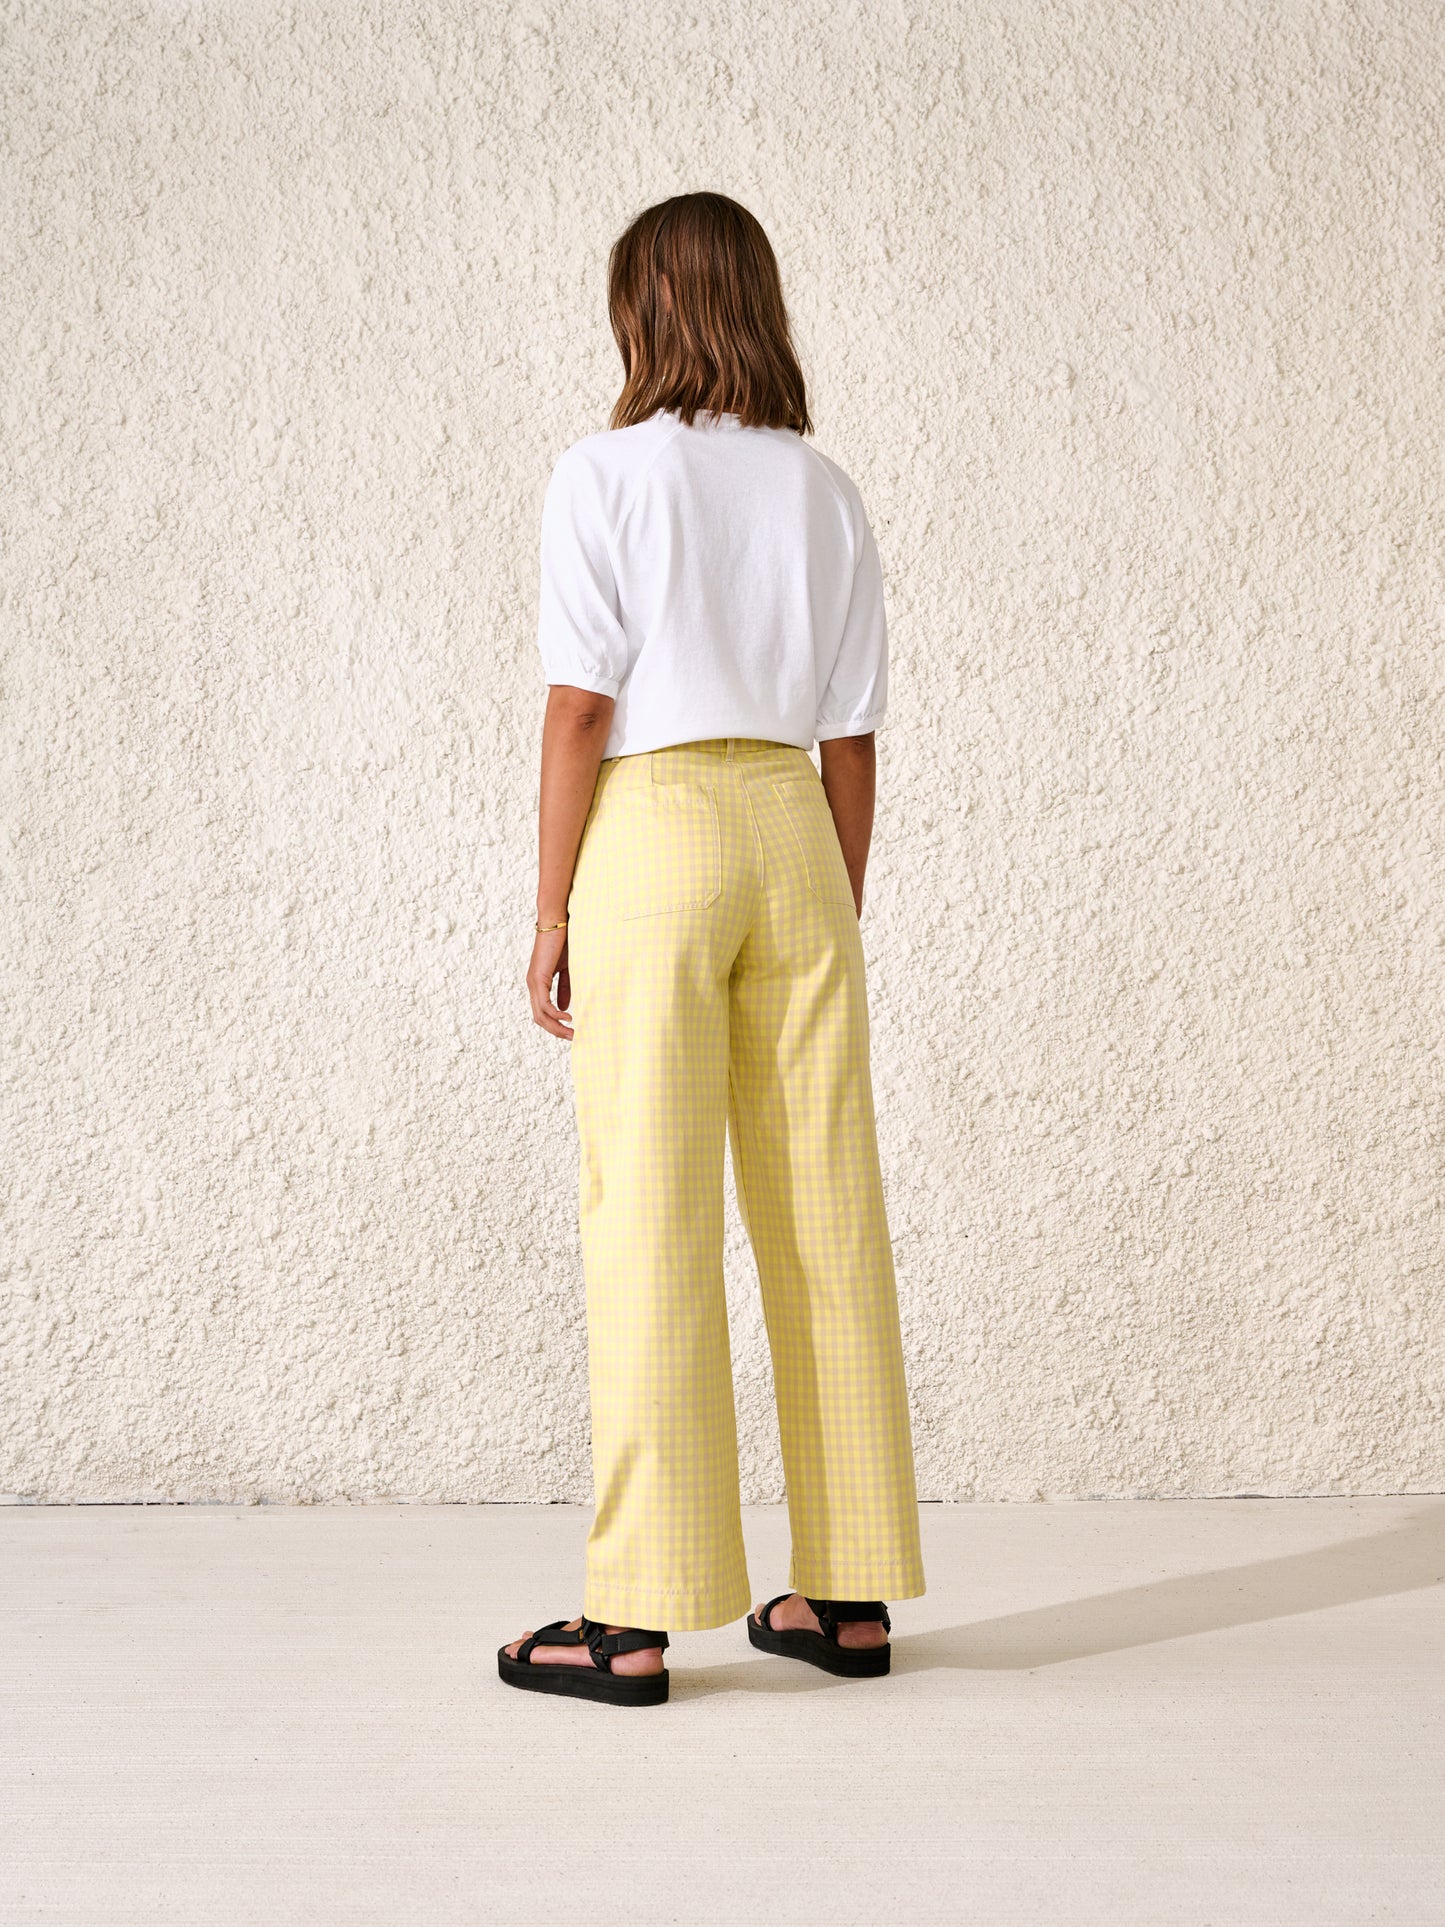 Bellerose - Lottie Pants: Yellow Check